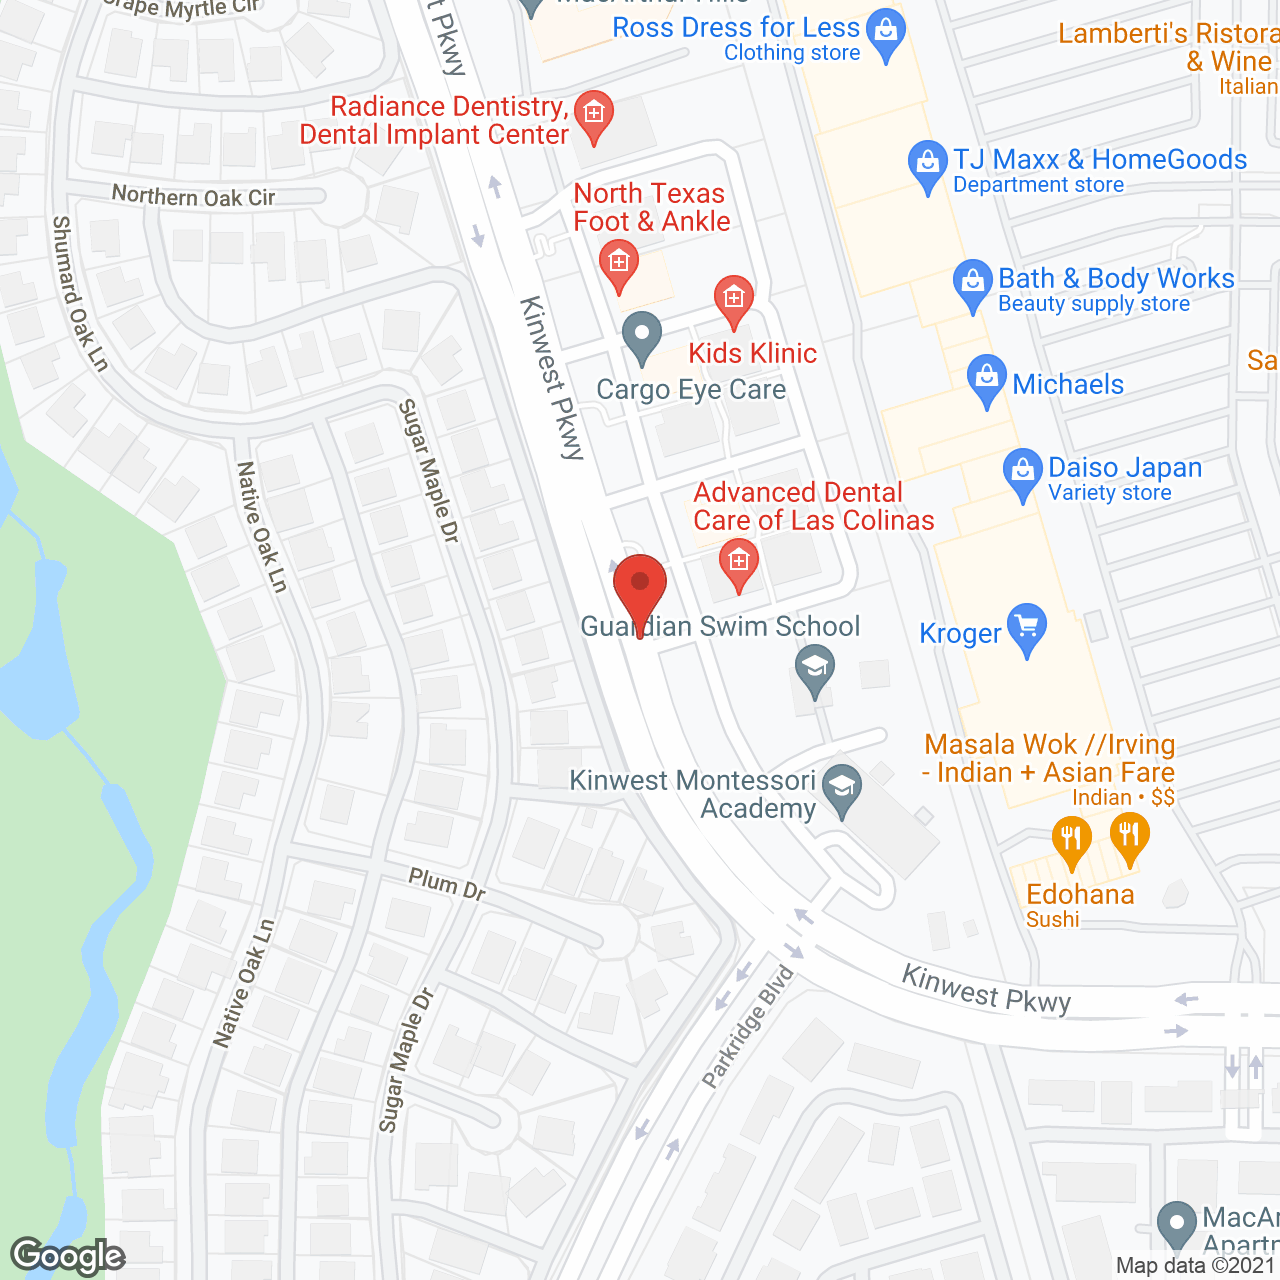 MacArthur Hills in google map